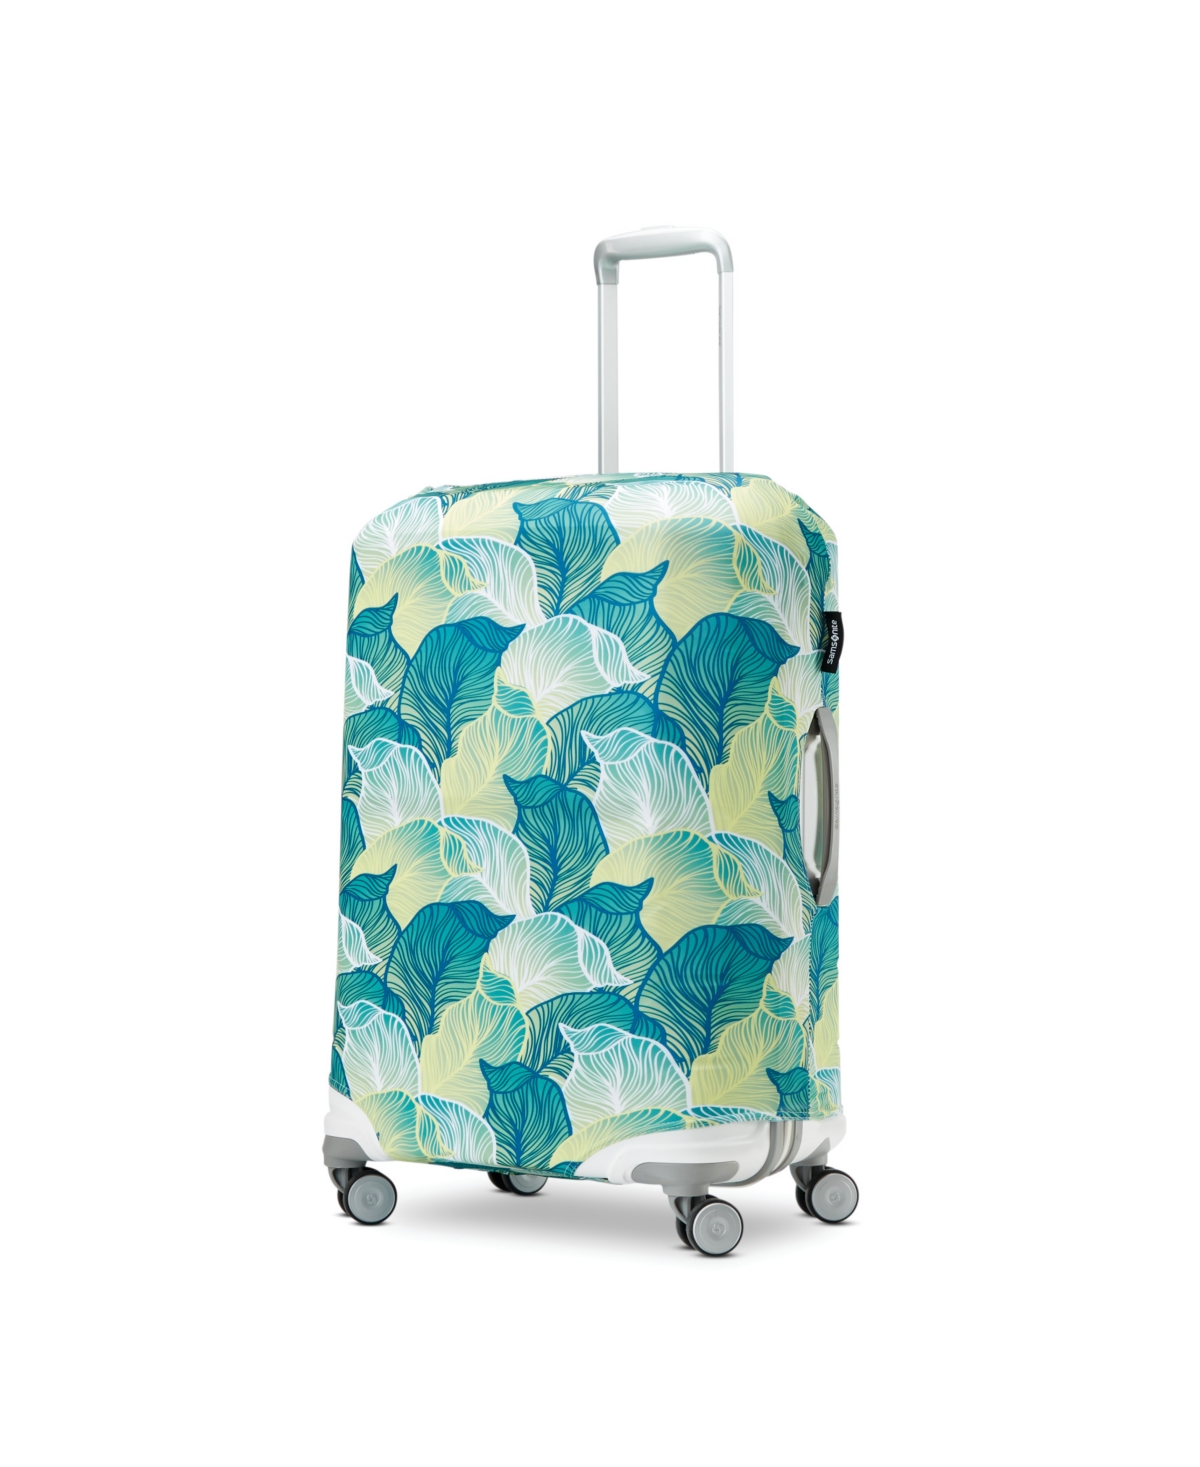 Samsonite Print Luggage Cover - Xl In Leaf Print